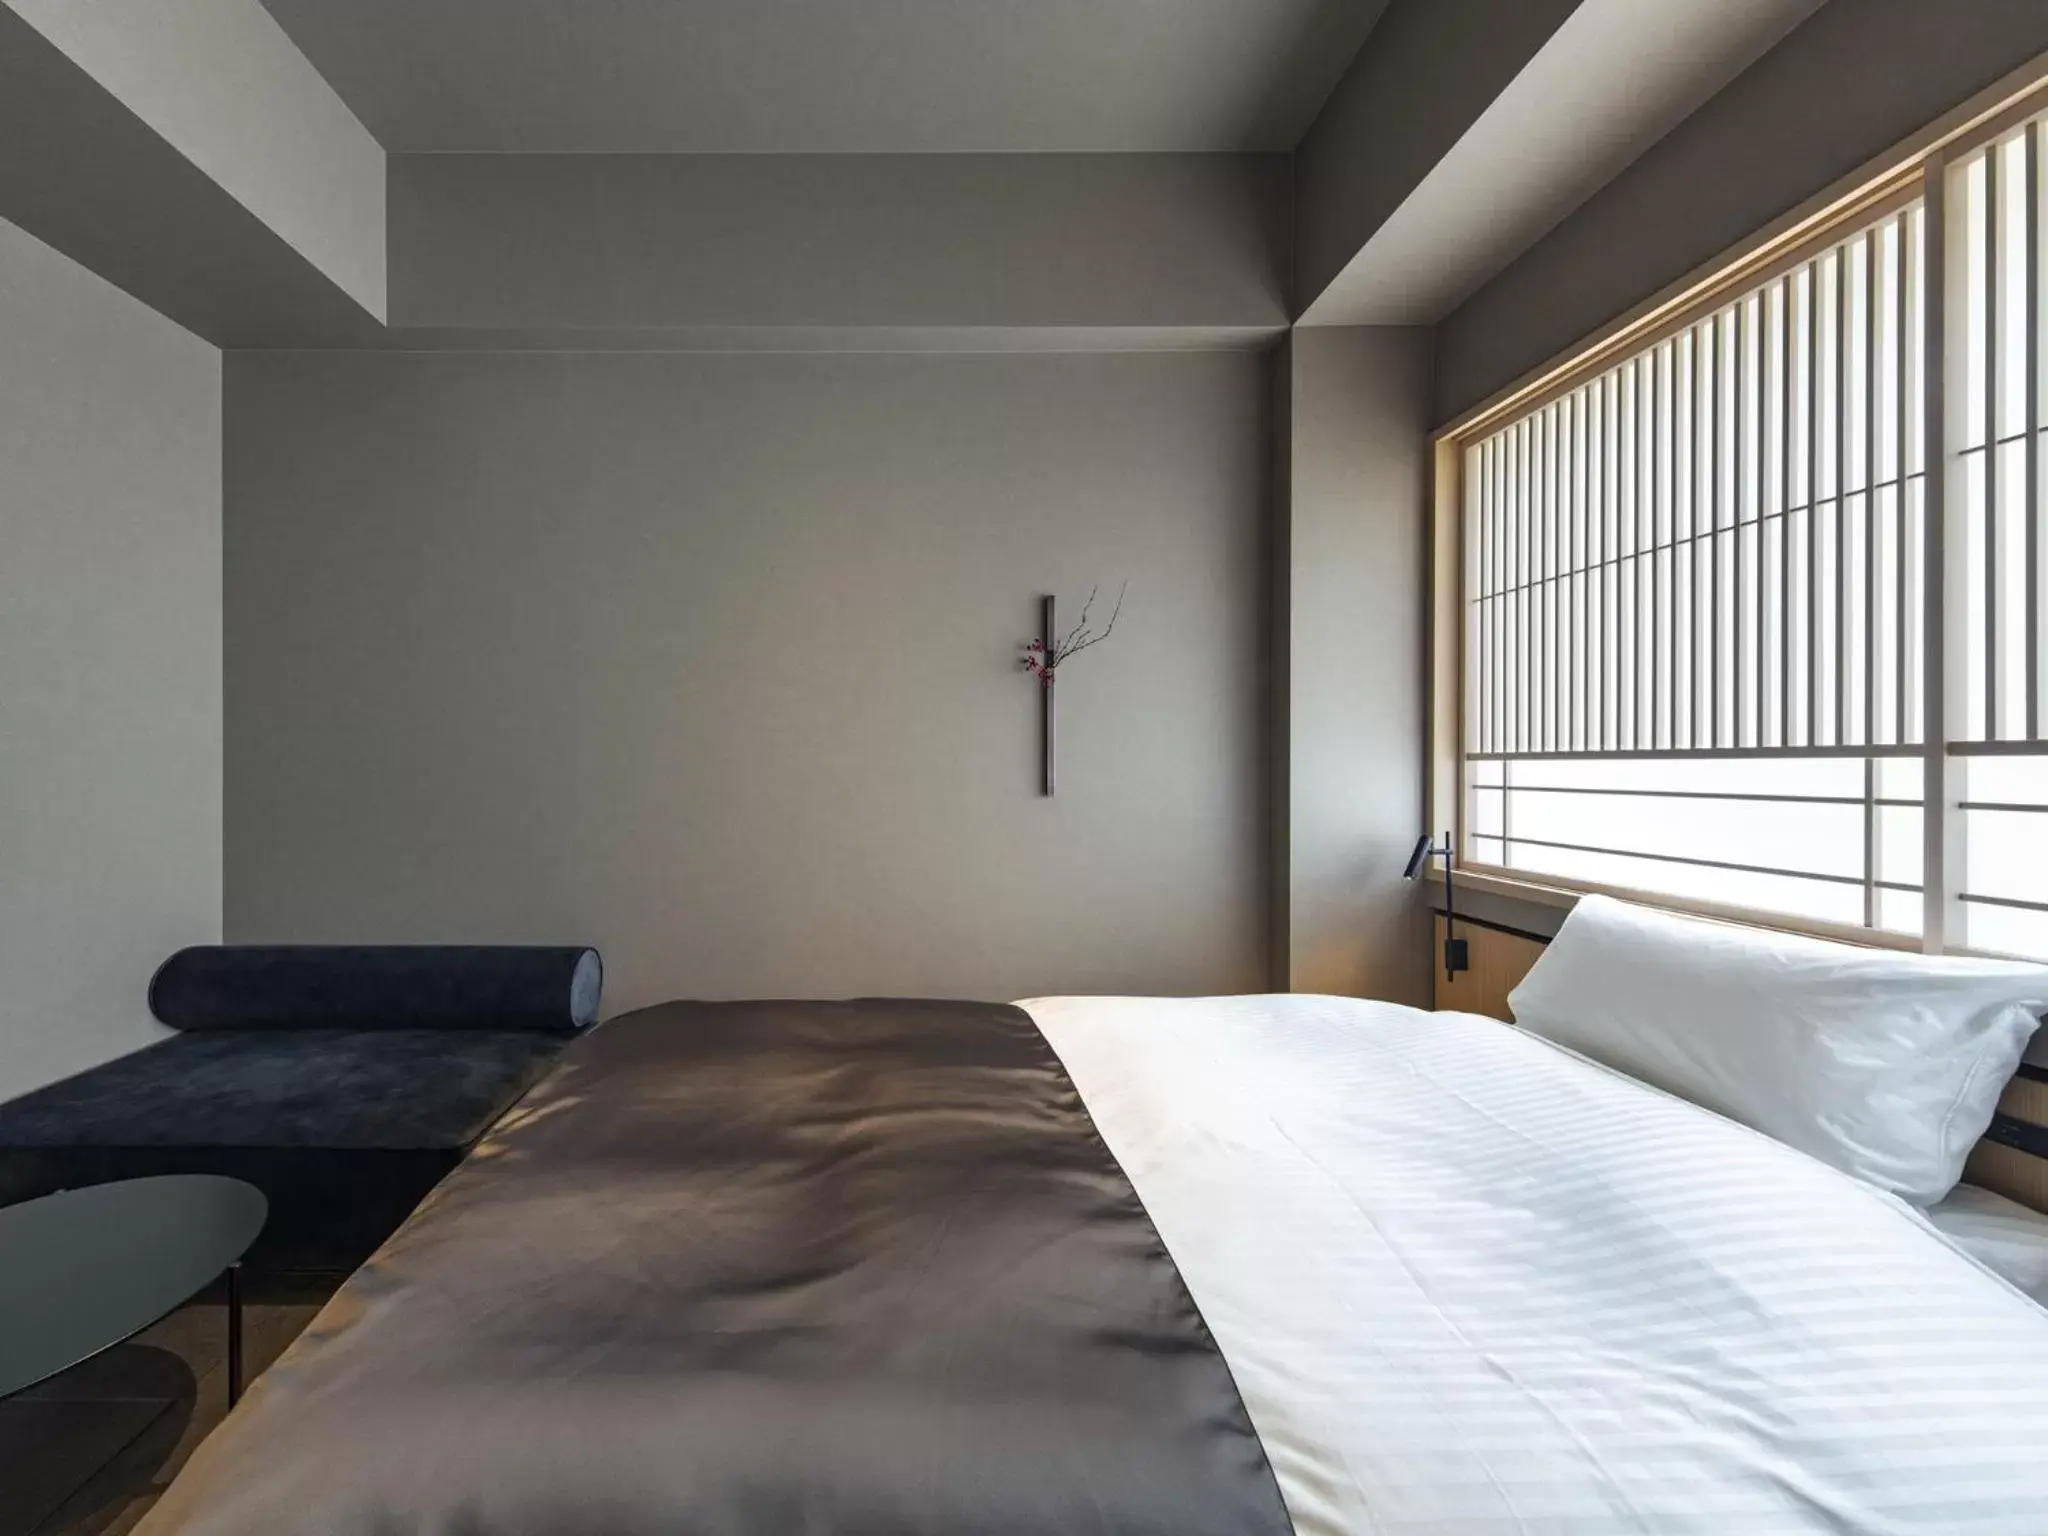 Moderate King Room - single occupancy in hotel tou nishinotoin kyoto